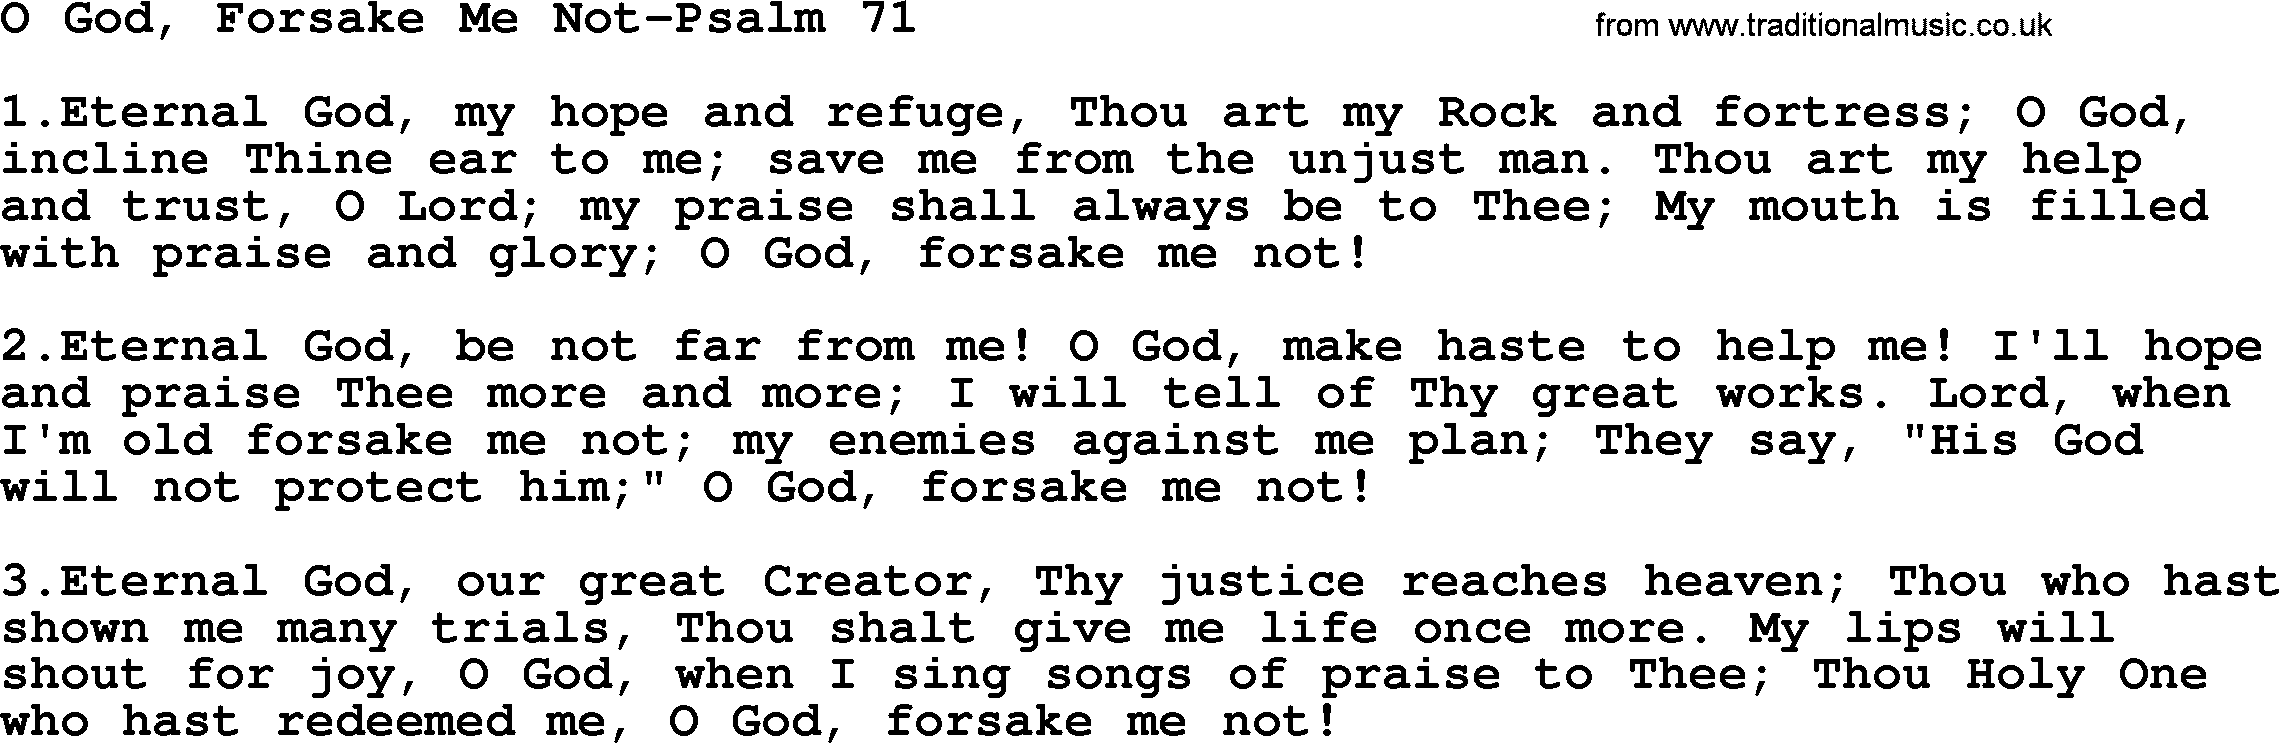 Hymns from the Psalms, Hymn: O God, Forsake Me Not-Psalm 71, lyrics with PDF